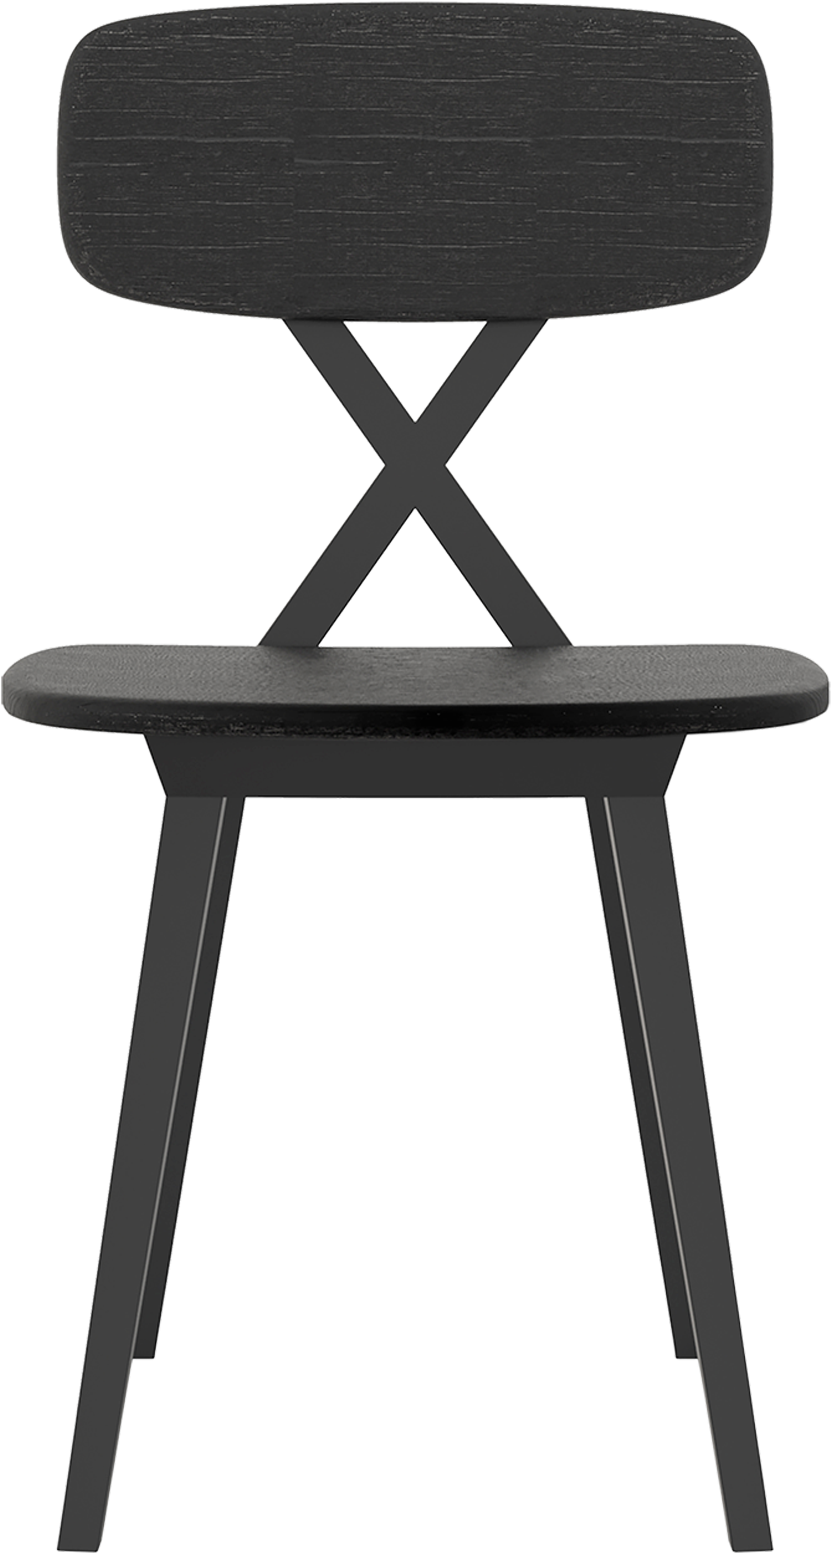 Explore X Chair Without Cushion / X2nika Zupanc 358,00€ - X Chair Qeeboo Clipart (2048x2048), Png Download